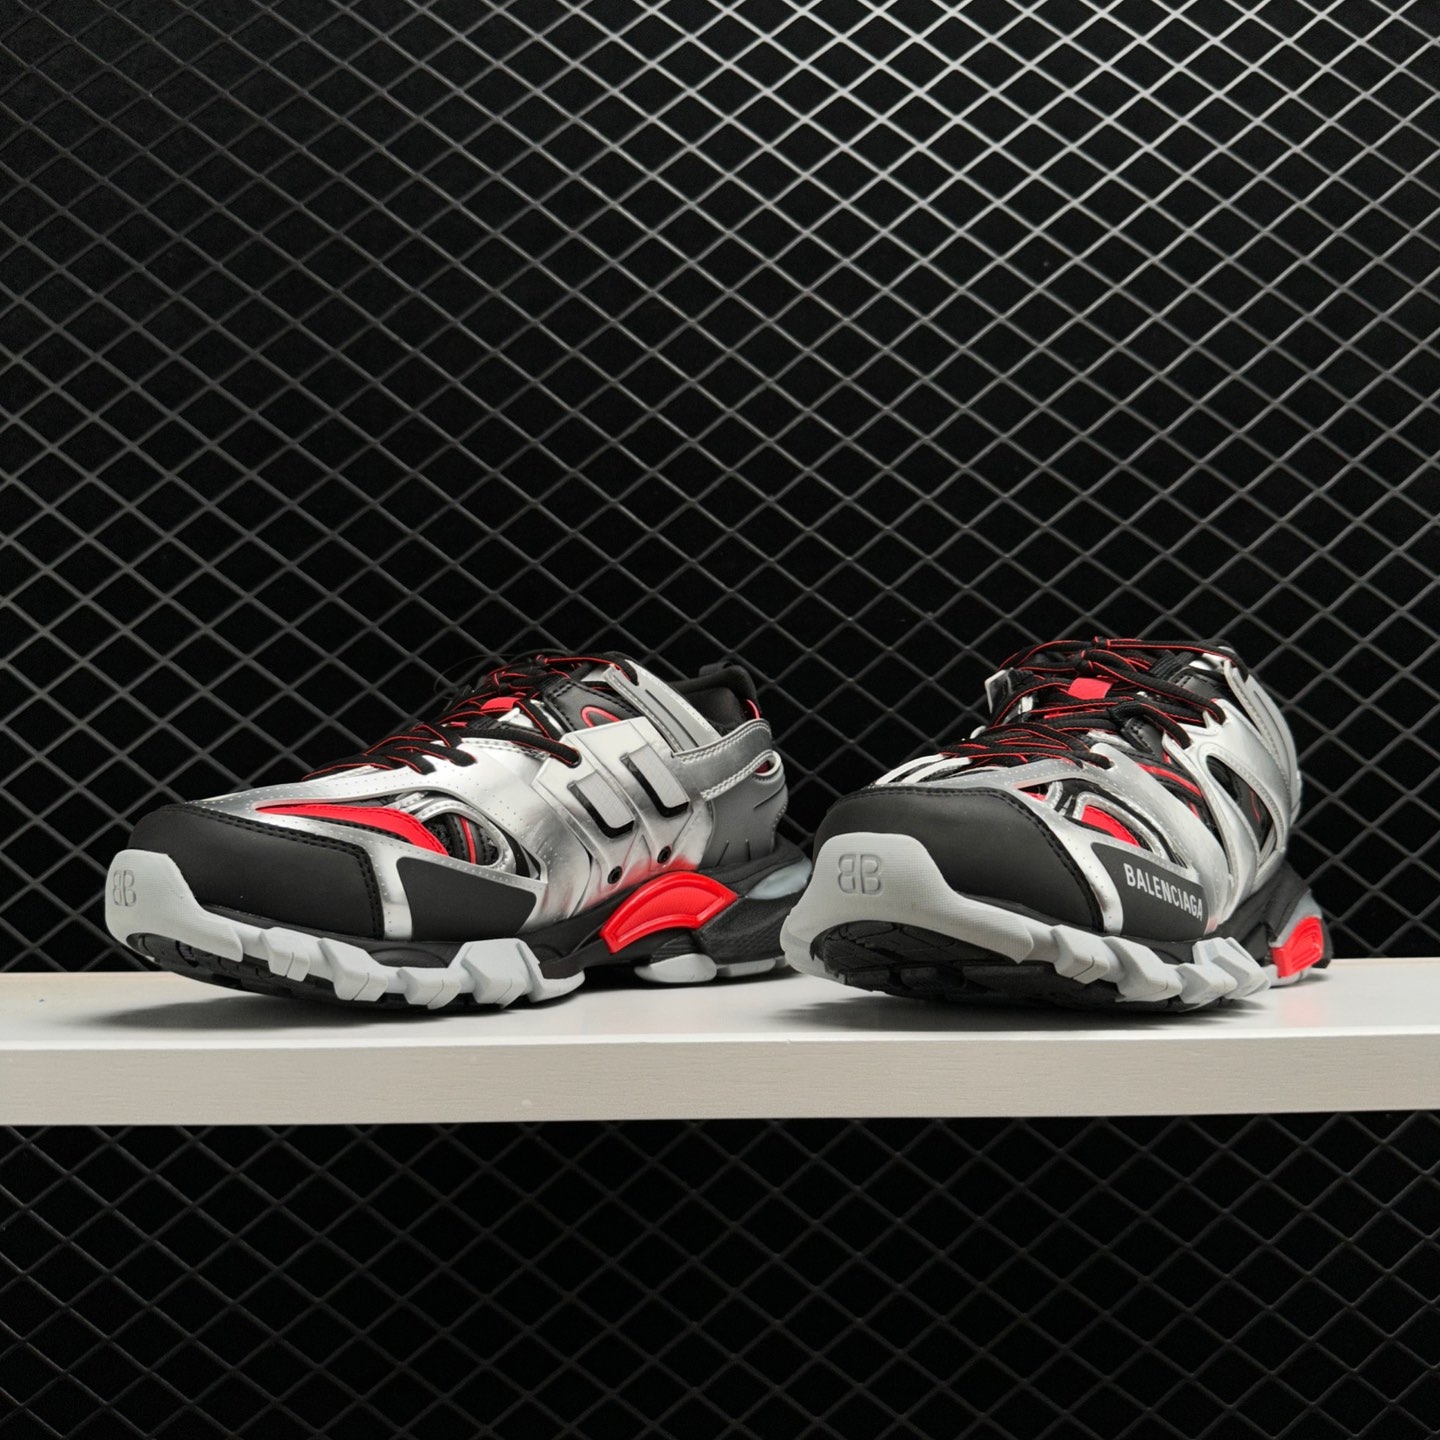 Balenciaga Black & Silver Track Sneakers | Trendy Athletic Footwear